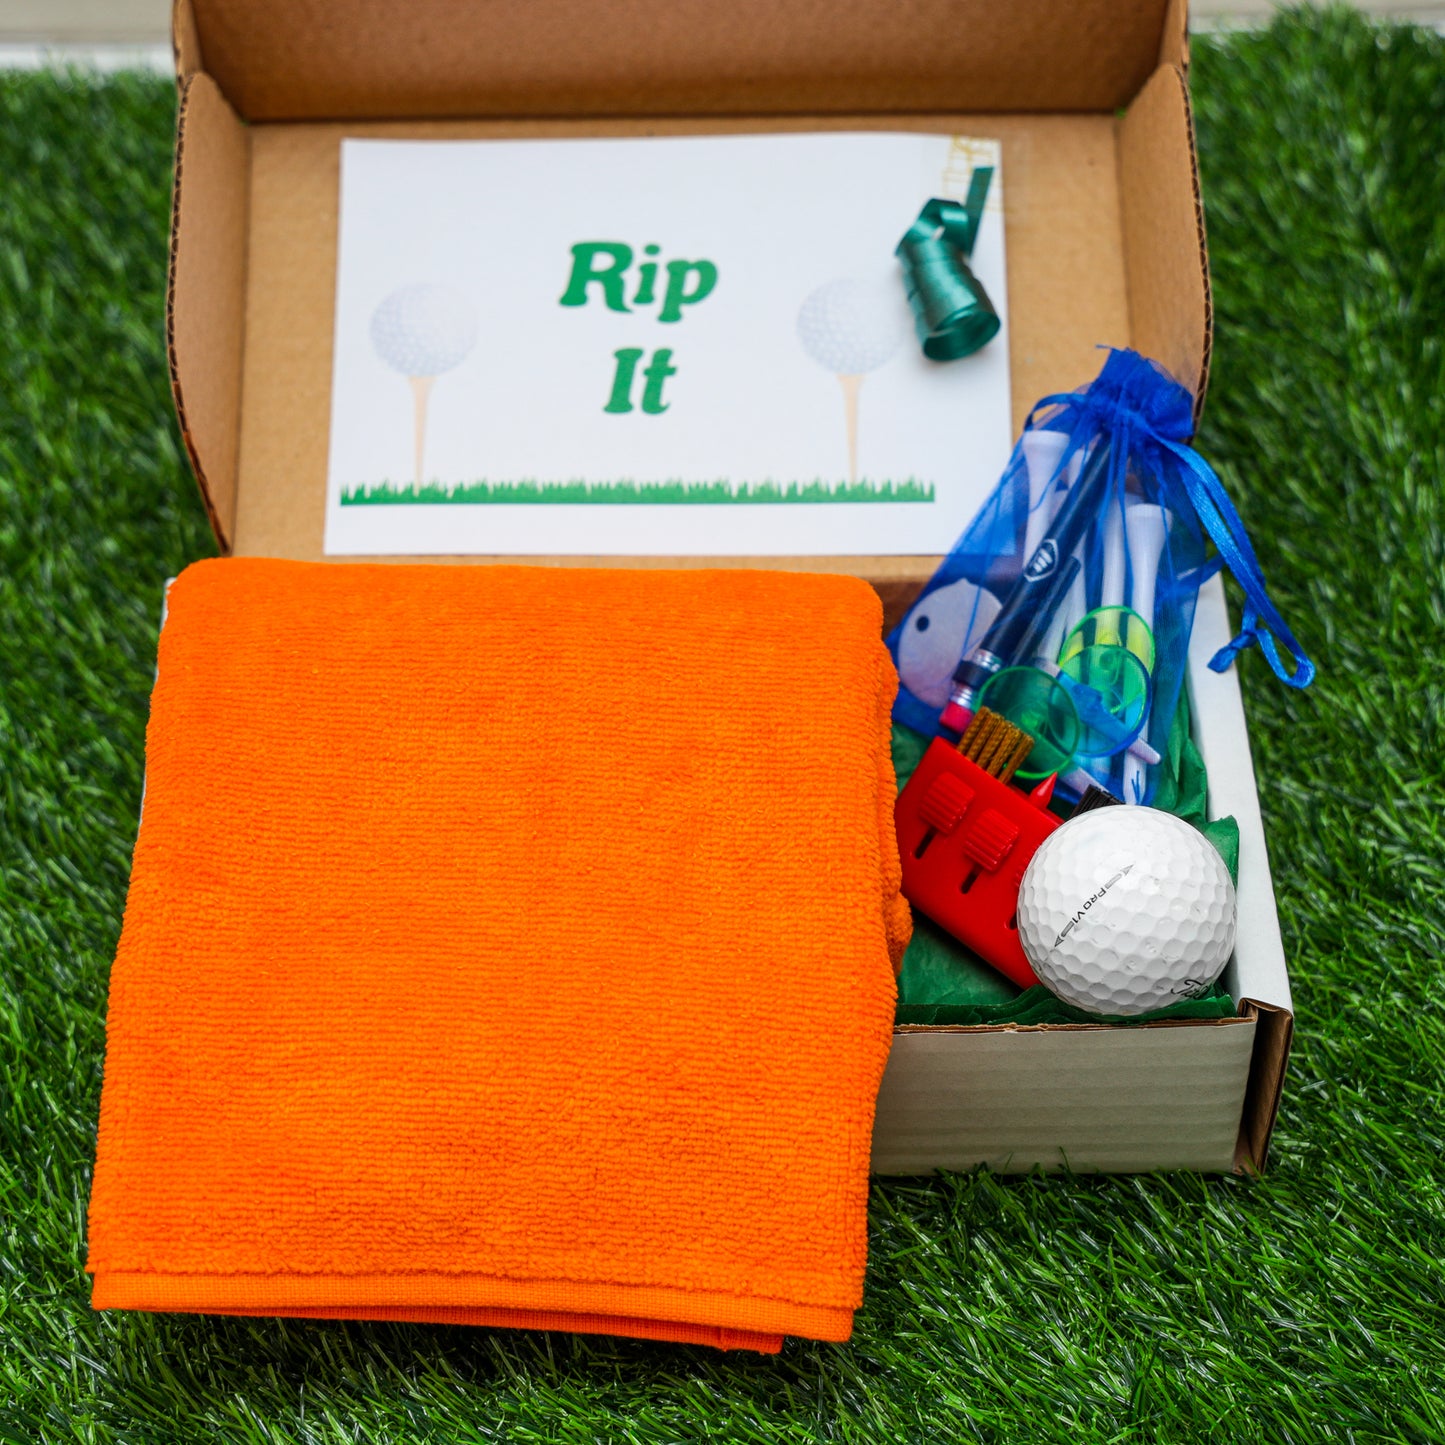 Personalised Tri Fold Golf Towel with Name Golfing Gift Box  - Always Looking Good - Orange Towel  